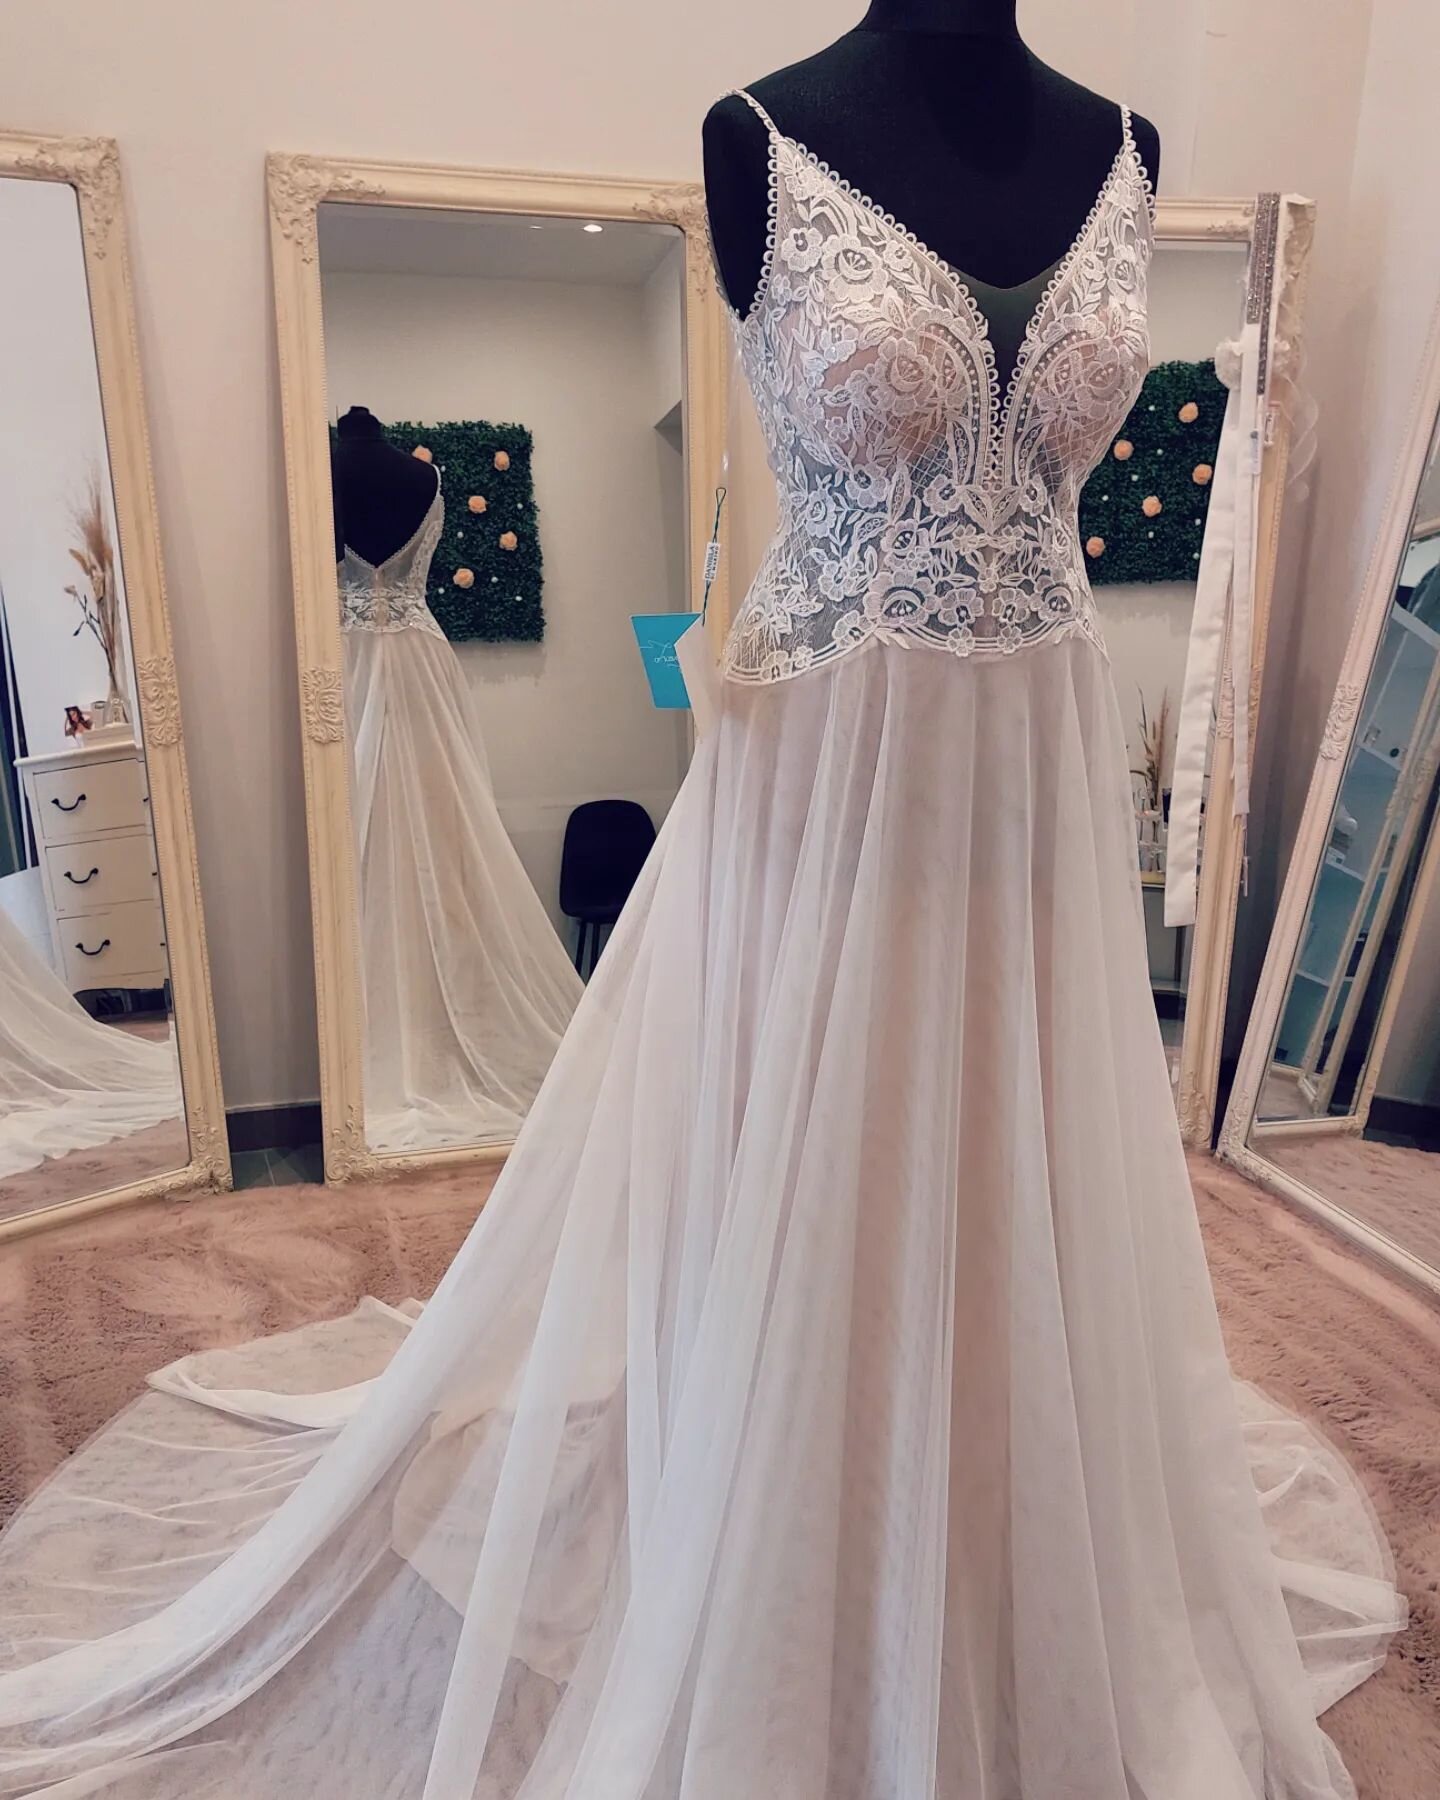 ✨️Daniela Di Marino 6359

Wil jij deze prachtige jurk passen? Maak nu jouw pas afspraak via mail info@novabruidsmode.be of de website www.novabruidsmode.be/contact ✨️

.
.
.

#bruidsmode #trouwjurk #trouwkleed #verloofd #bruidsjurk #trouwjurken #dani